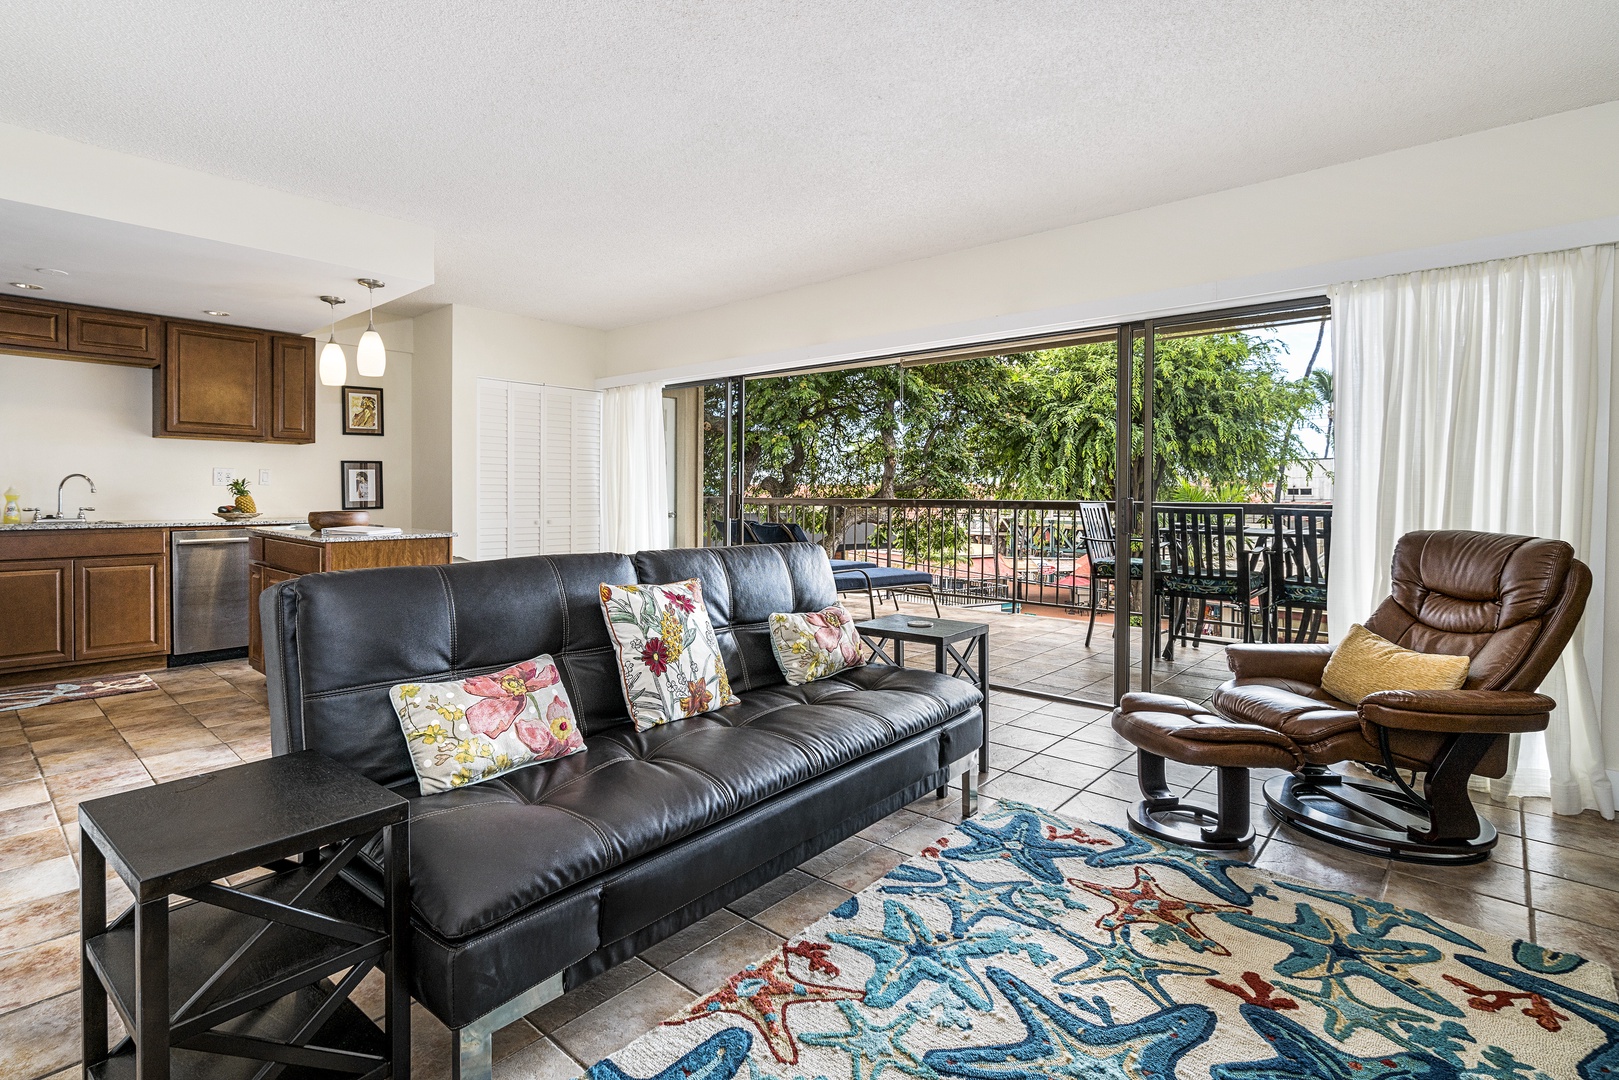 Kailua Kona Vacation Rentals, Kona Plaza 201 - Comfortable futon sofa with a view!